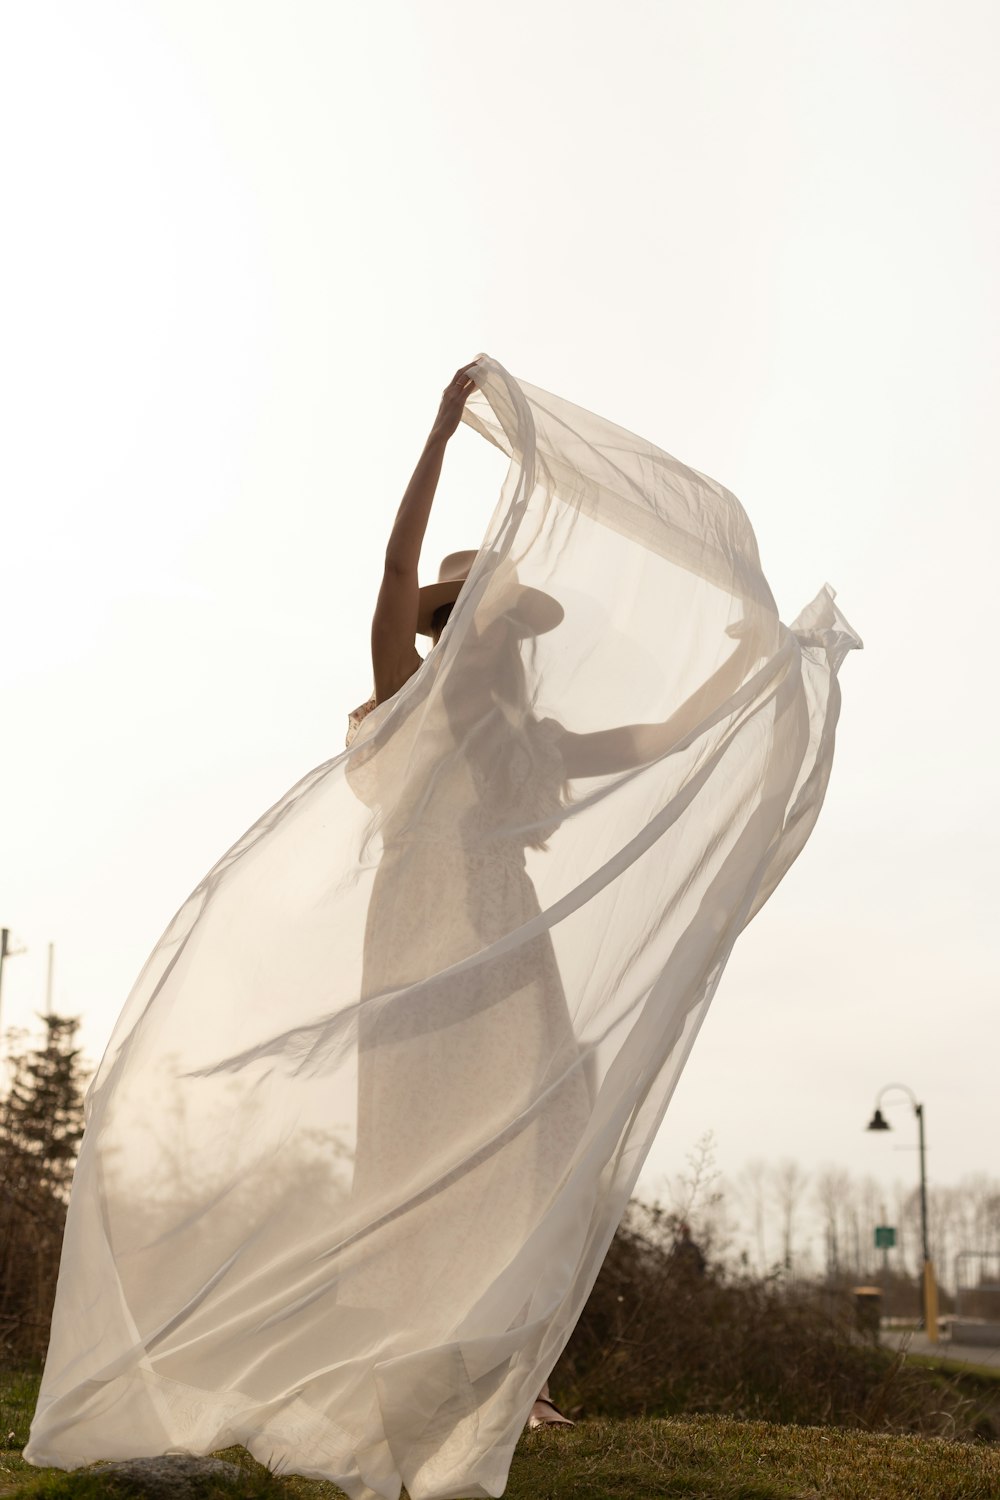 woman in white wedding dress